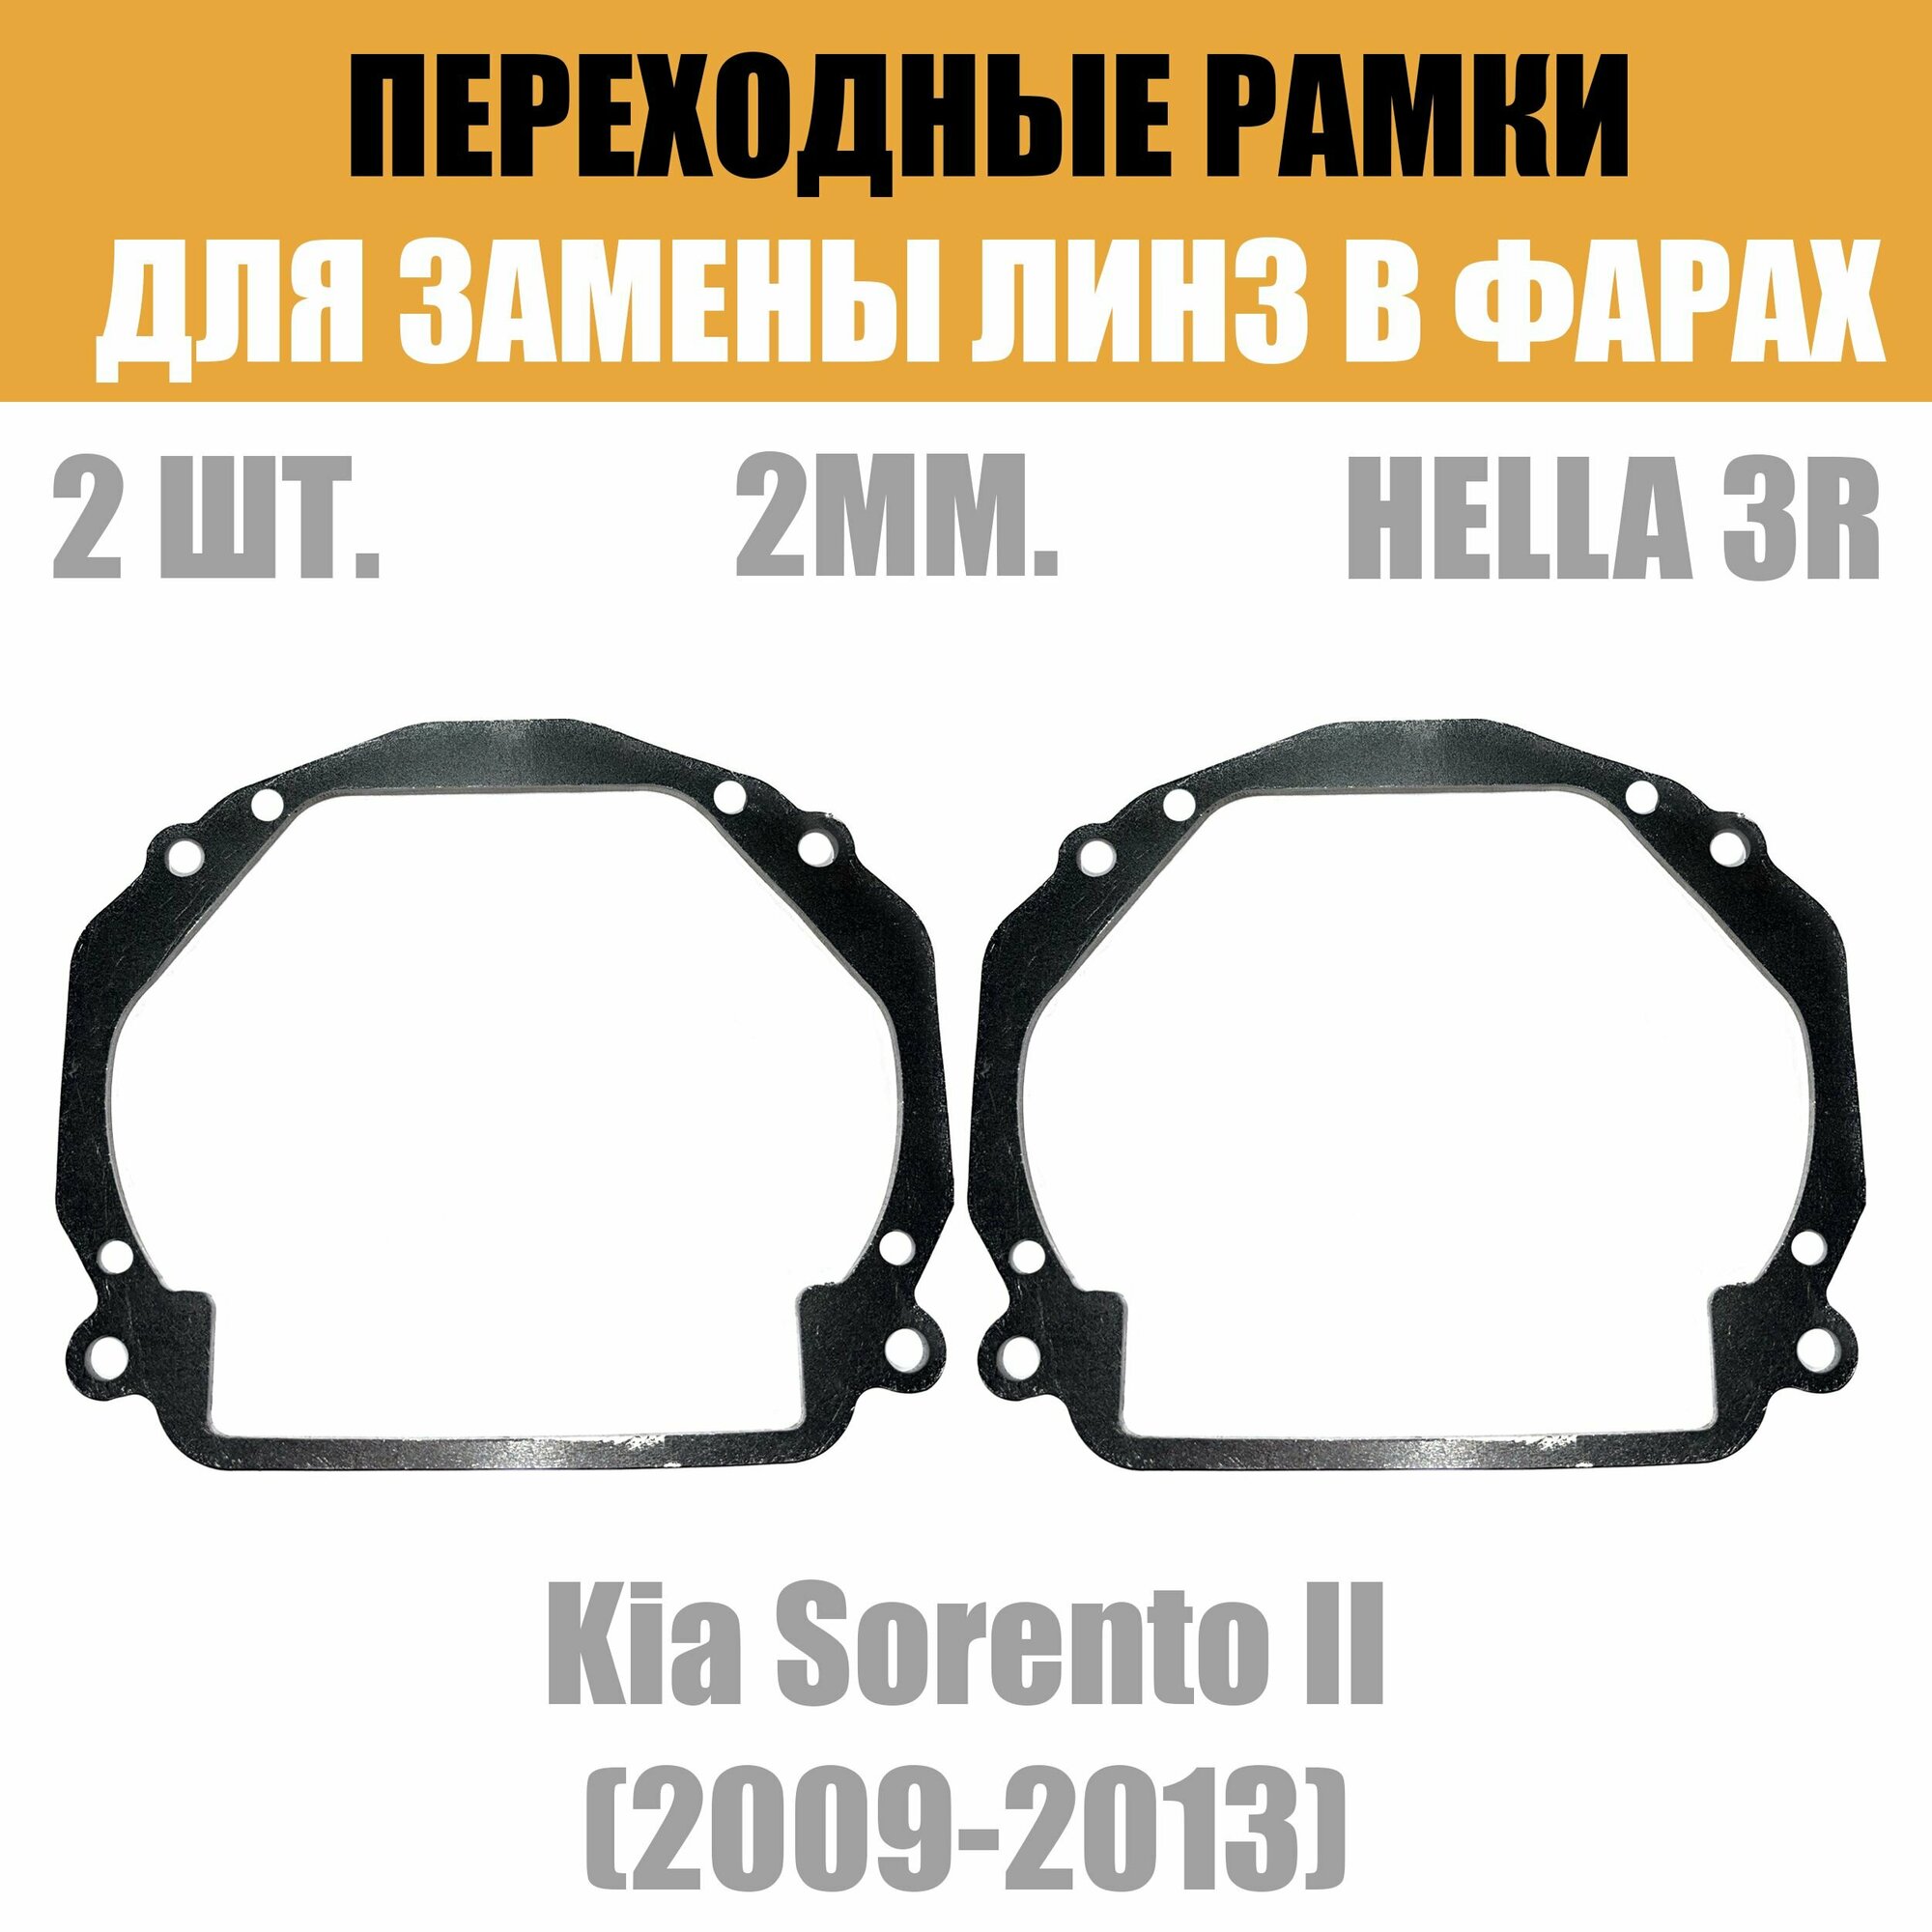 Переходные рамки для линз №56 на Kia Sorento II (2009-2013) под модуль Hella 3R/Hella 3 (Комплект 2шт)